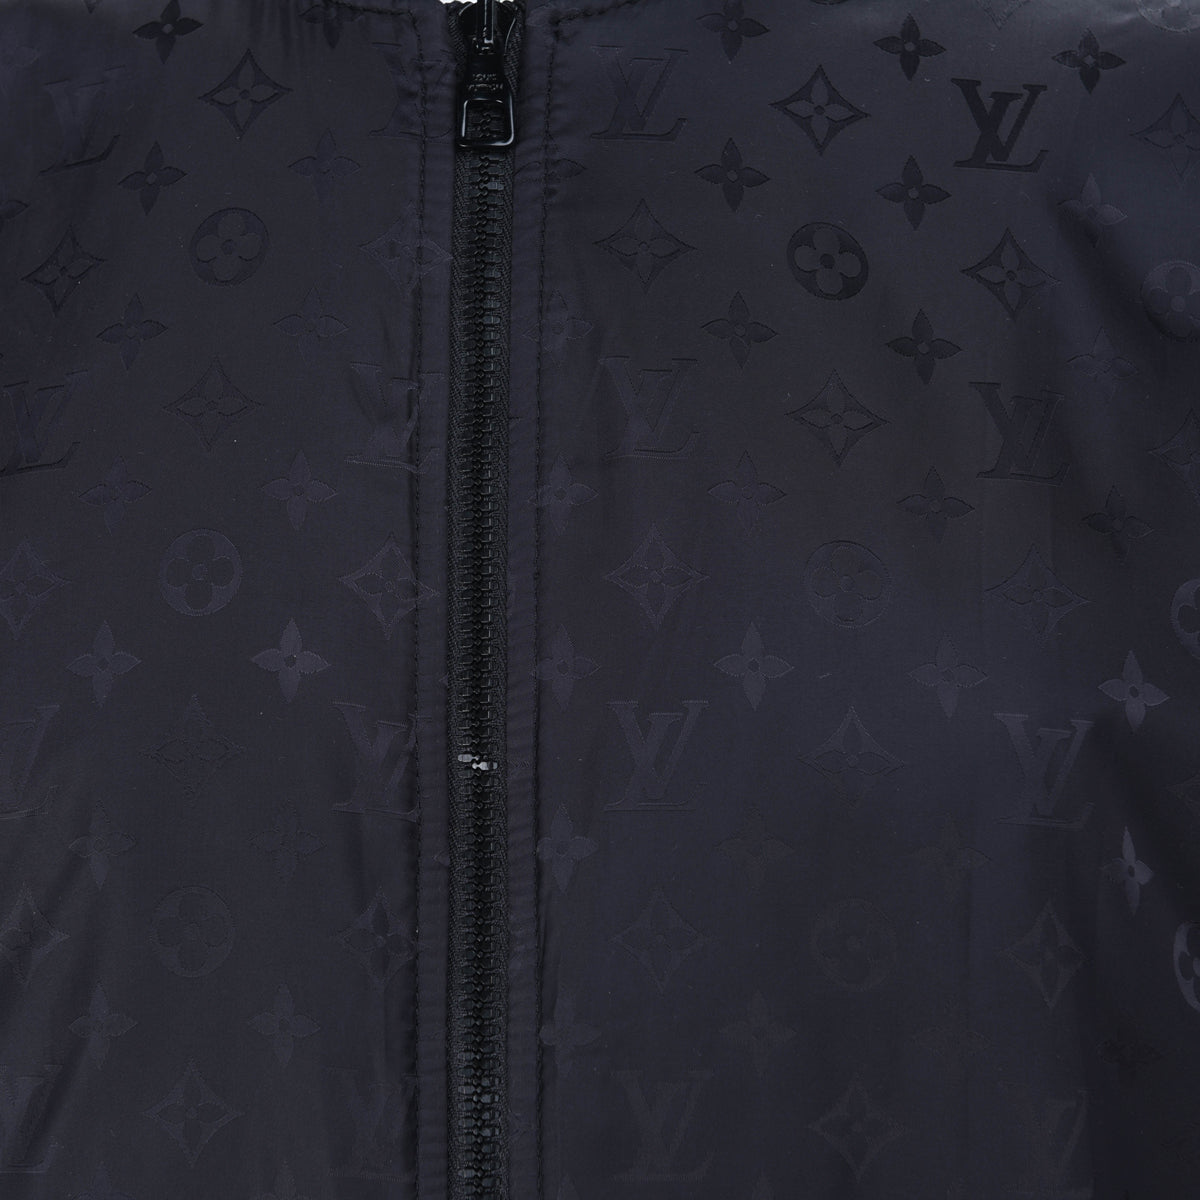 Louis Vuitton Black Leather & Nylon Reversible Bomb